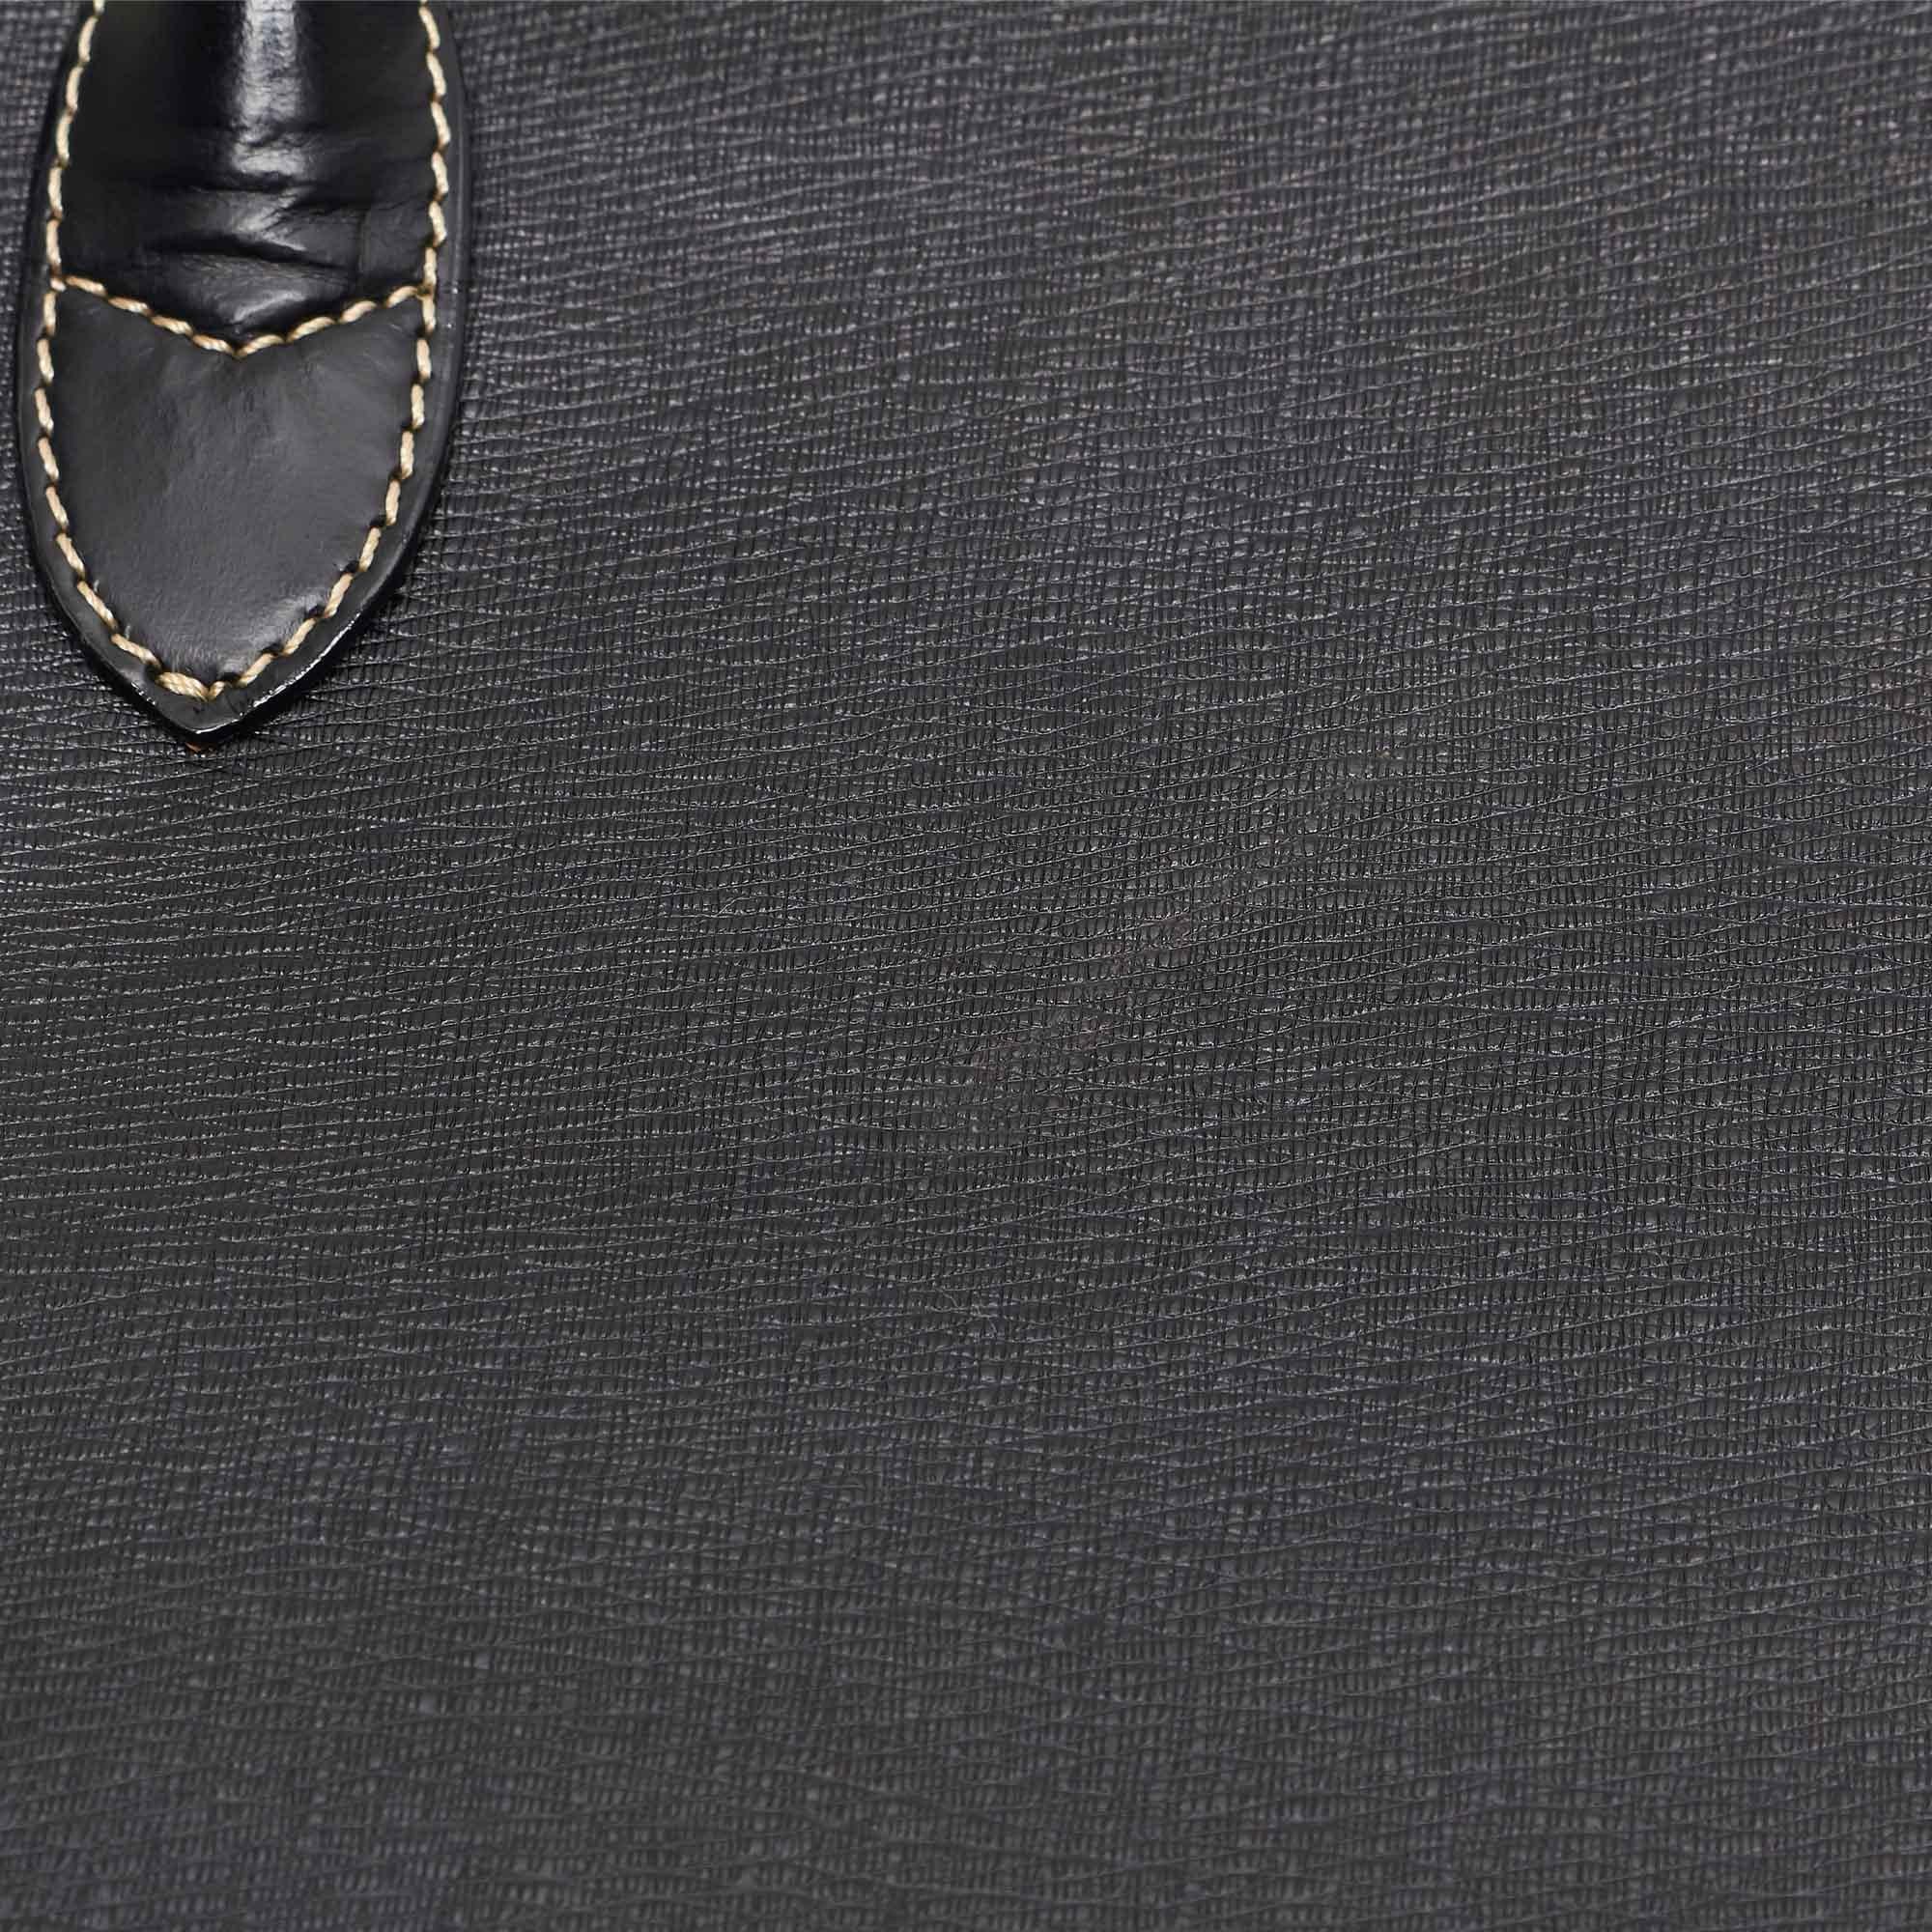 Vintage Authentic Burberry Black Leather Tote Bag UNITED KINGDOM LARGE  For Sale 3